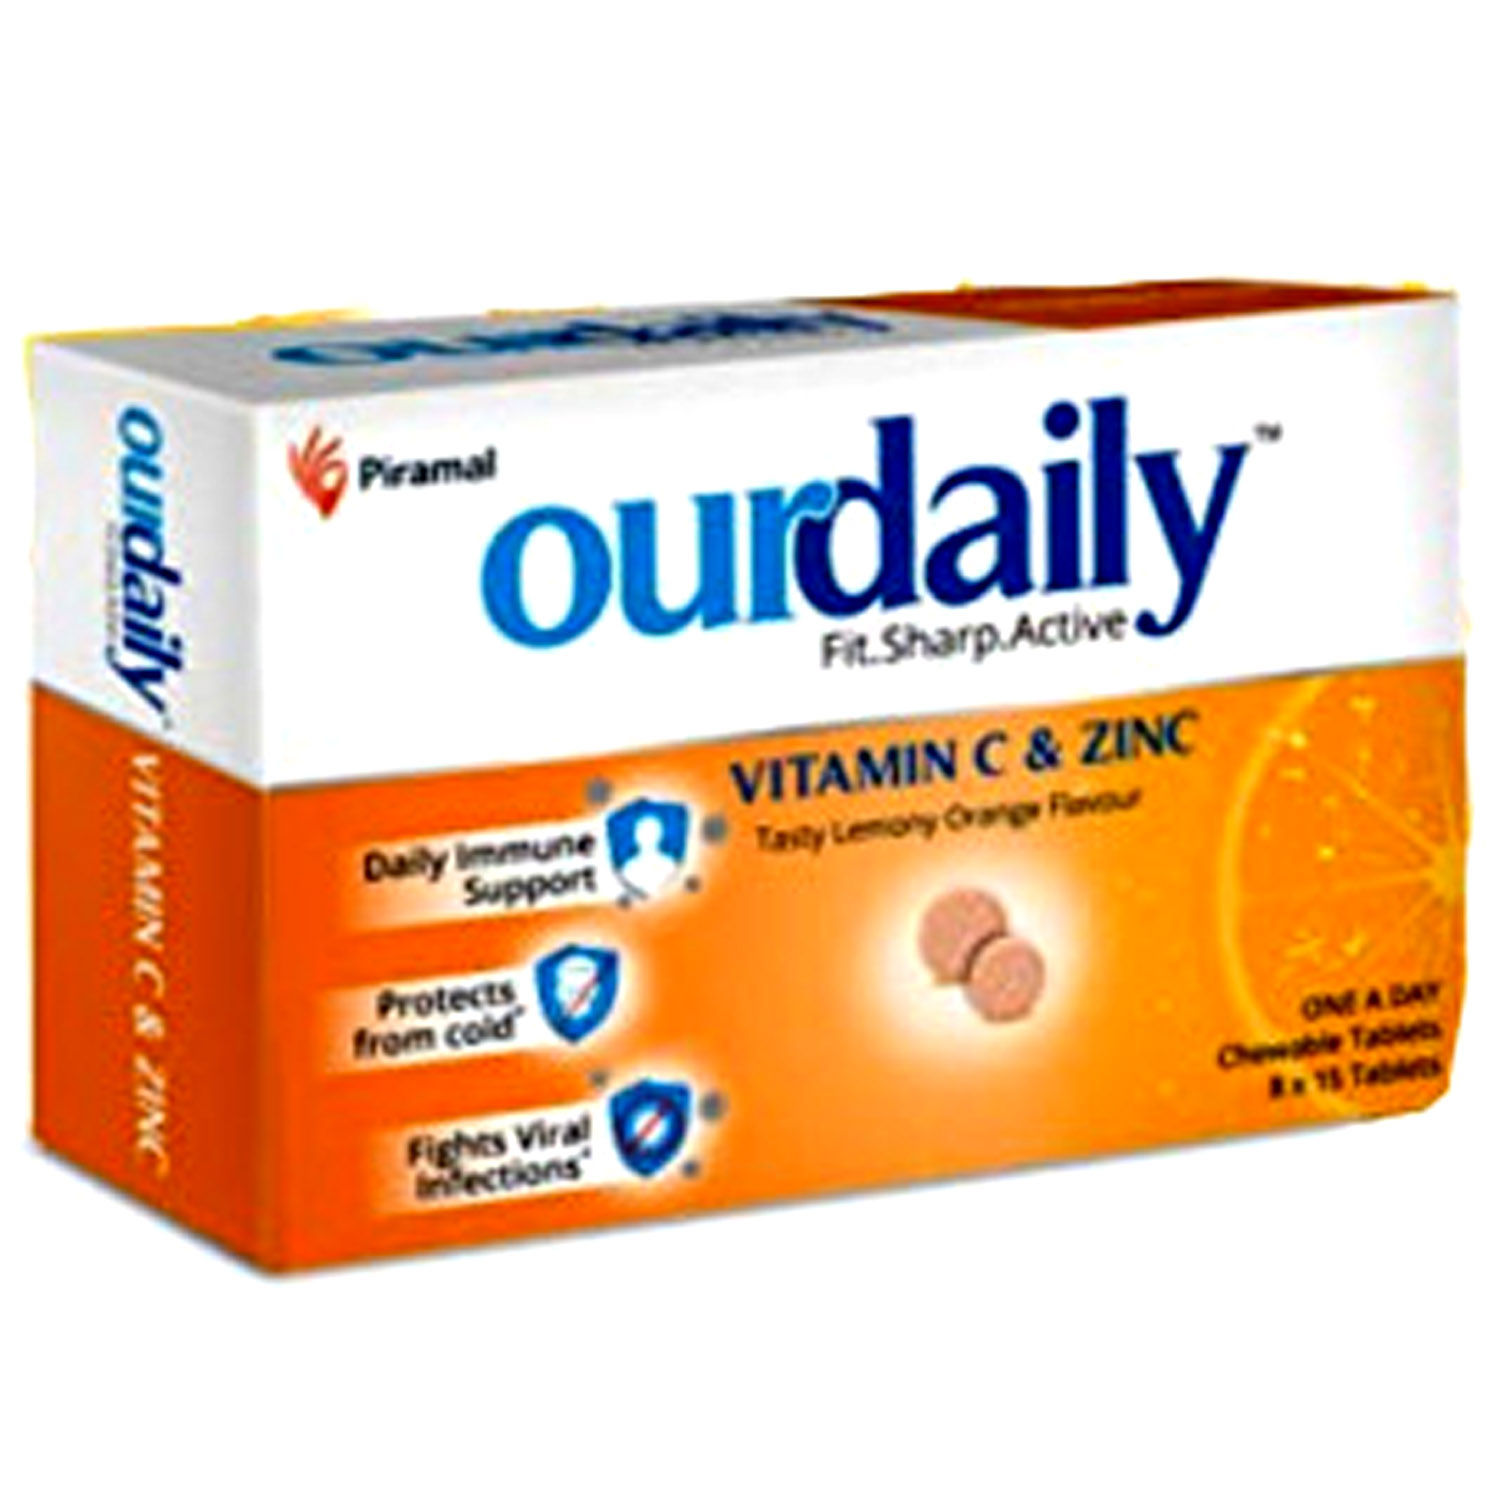 Buy Ourdaily Vitamin C & Zinc Lemon & Orange Flavoured, 15 Tablets Online